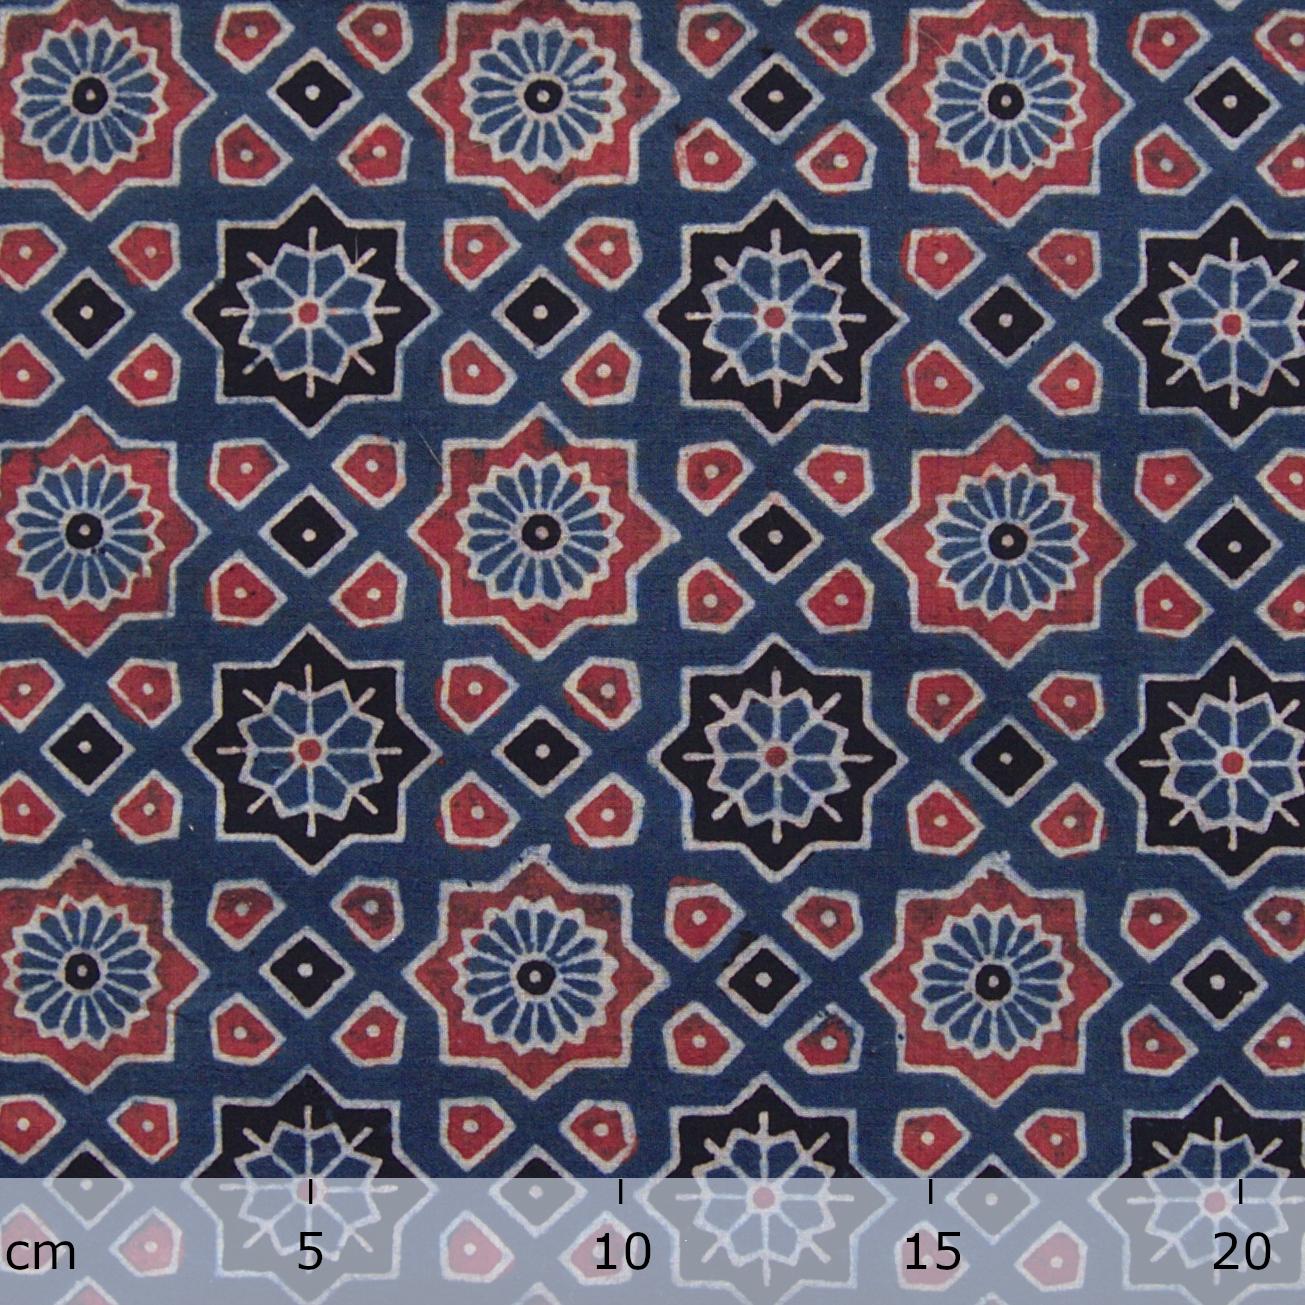 Block Printed Fabric, 100% Cotton, Ajrak Design: Blue Indigo Base, Madder Red, Iron Black Star. Ruler